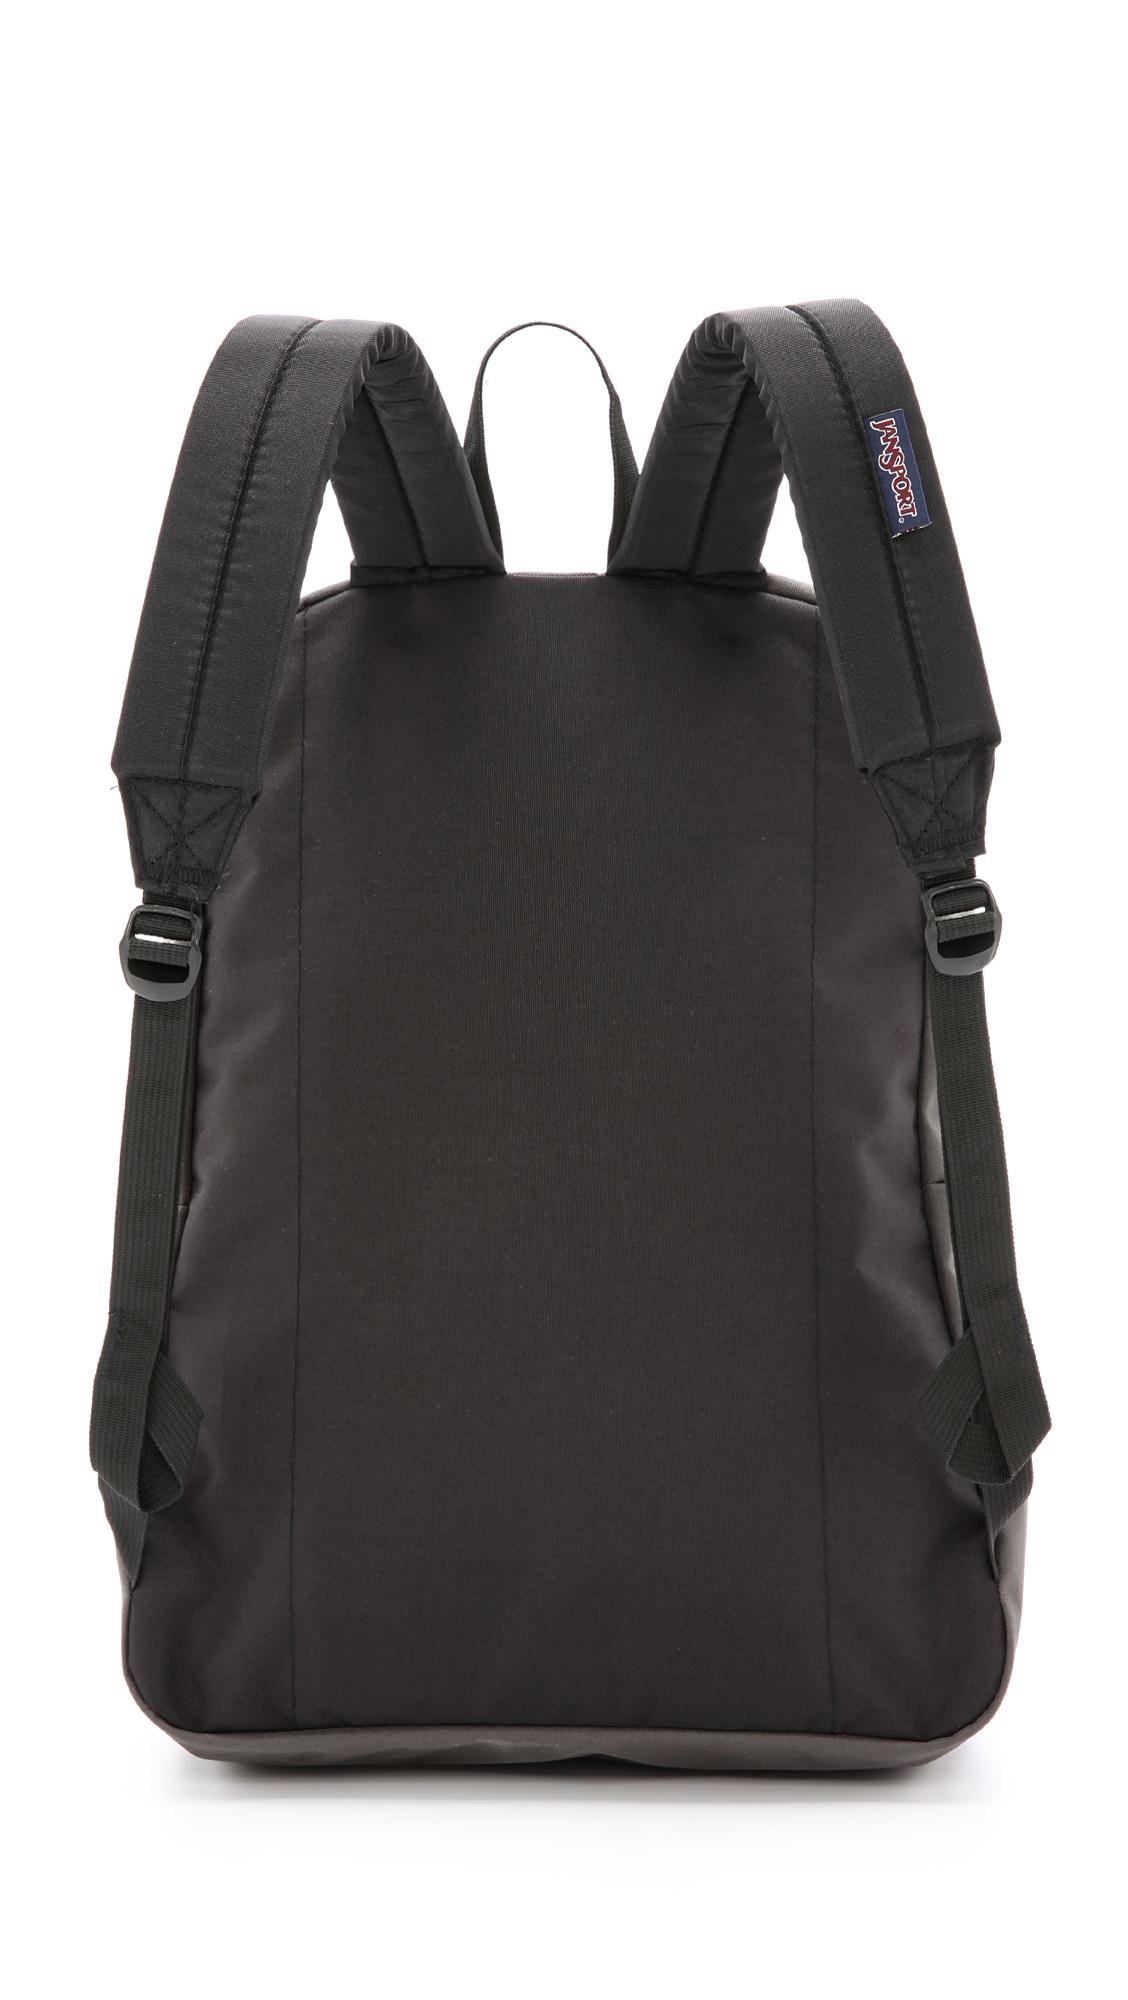 Jansport Superbreak Backpack in Gray for Men - Lyst